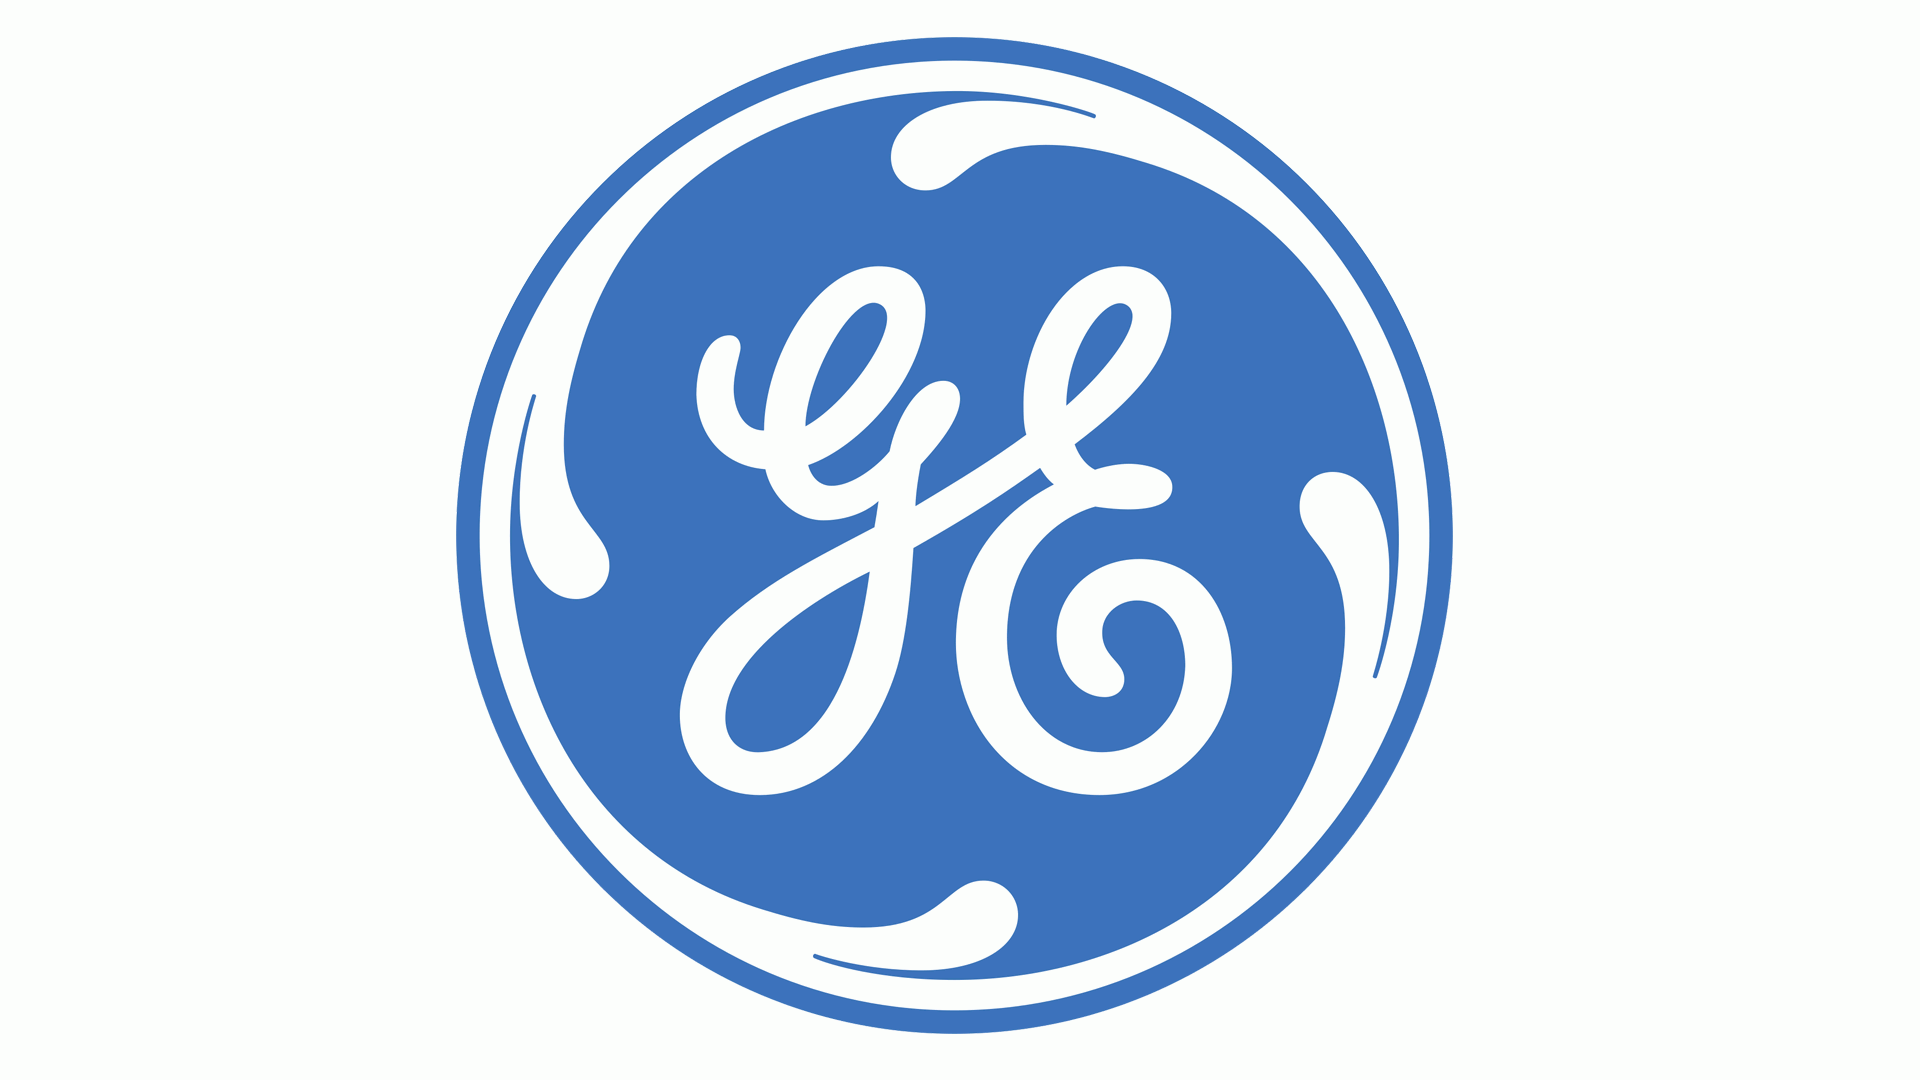 Logotype General Electric